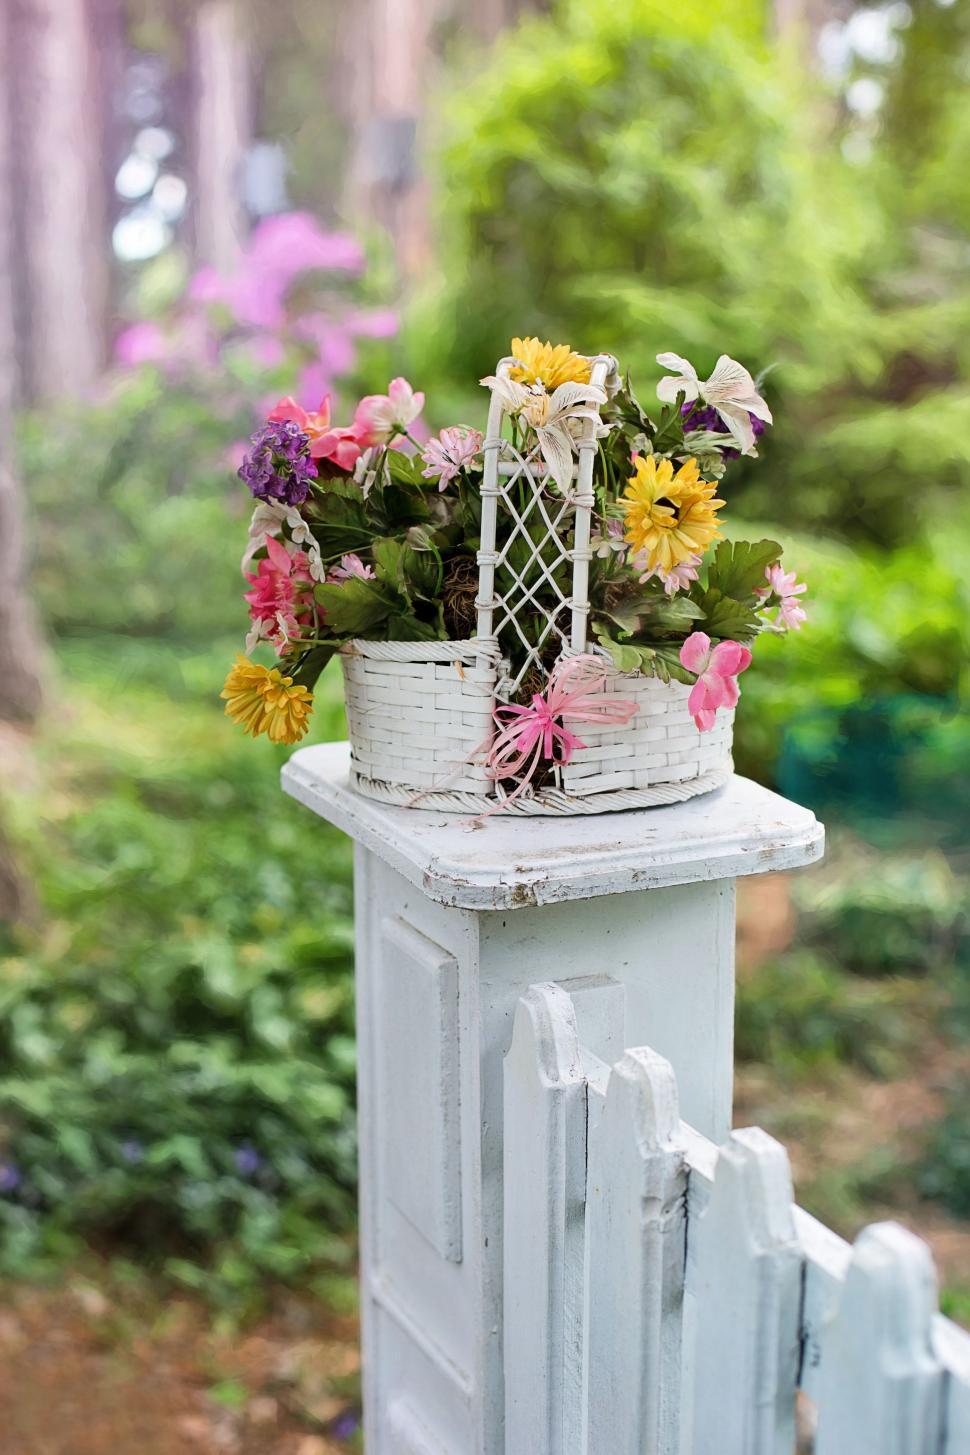 Free Image of Flower Basket in Garden 